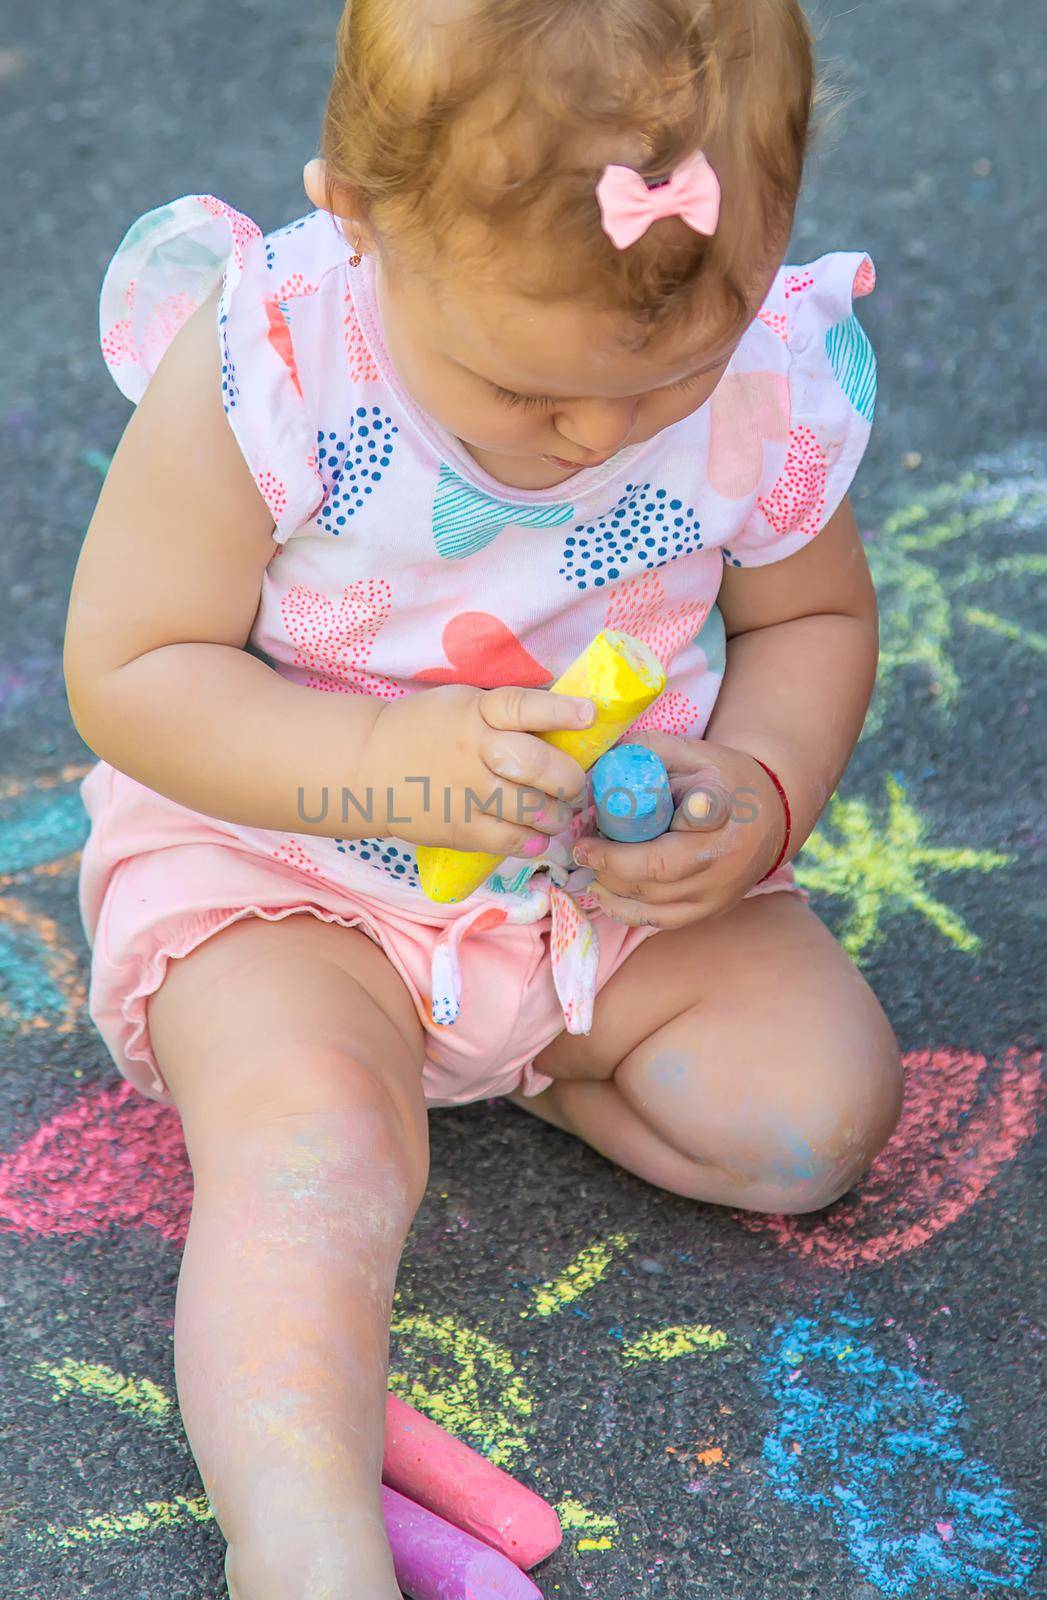 The child draws with chalk on the asphalt. Selective focus. by yanadjana